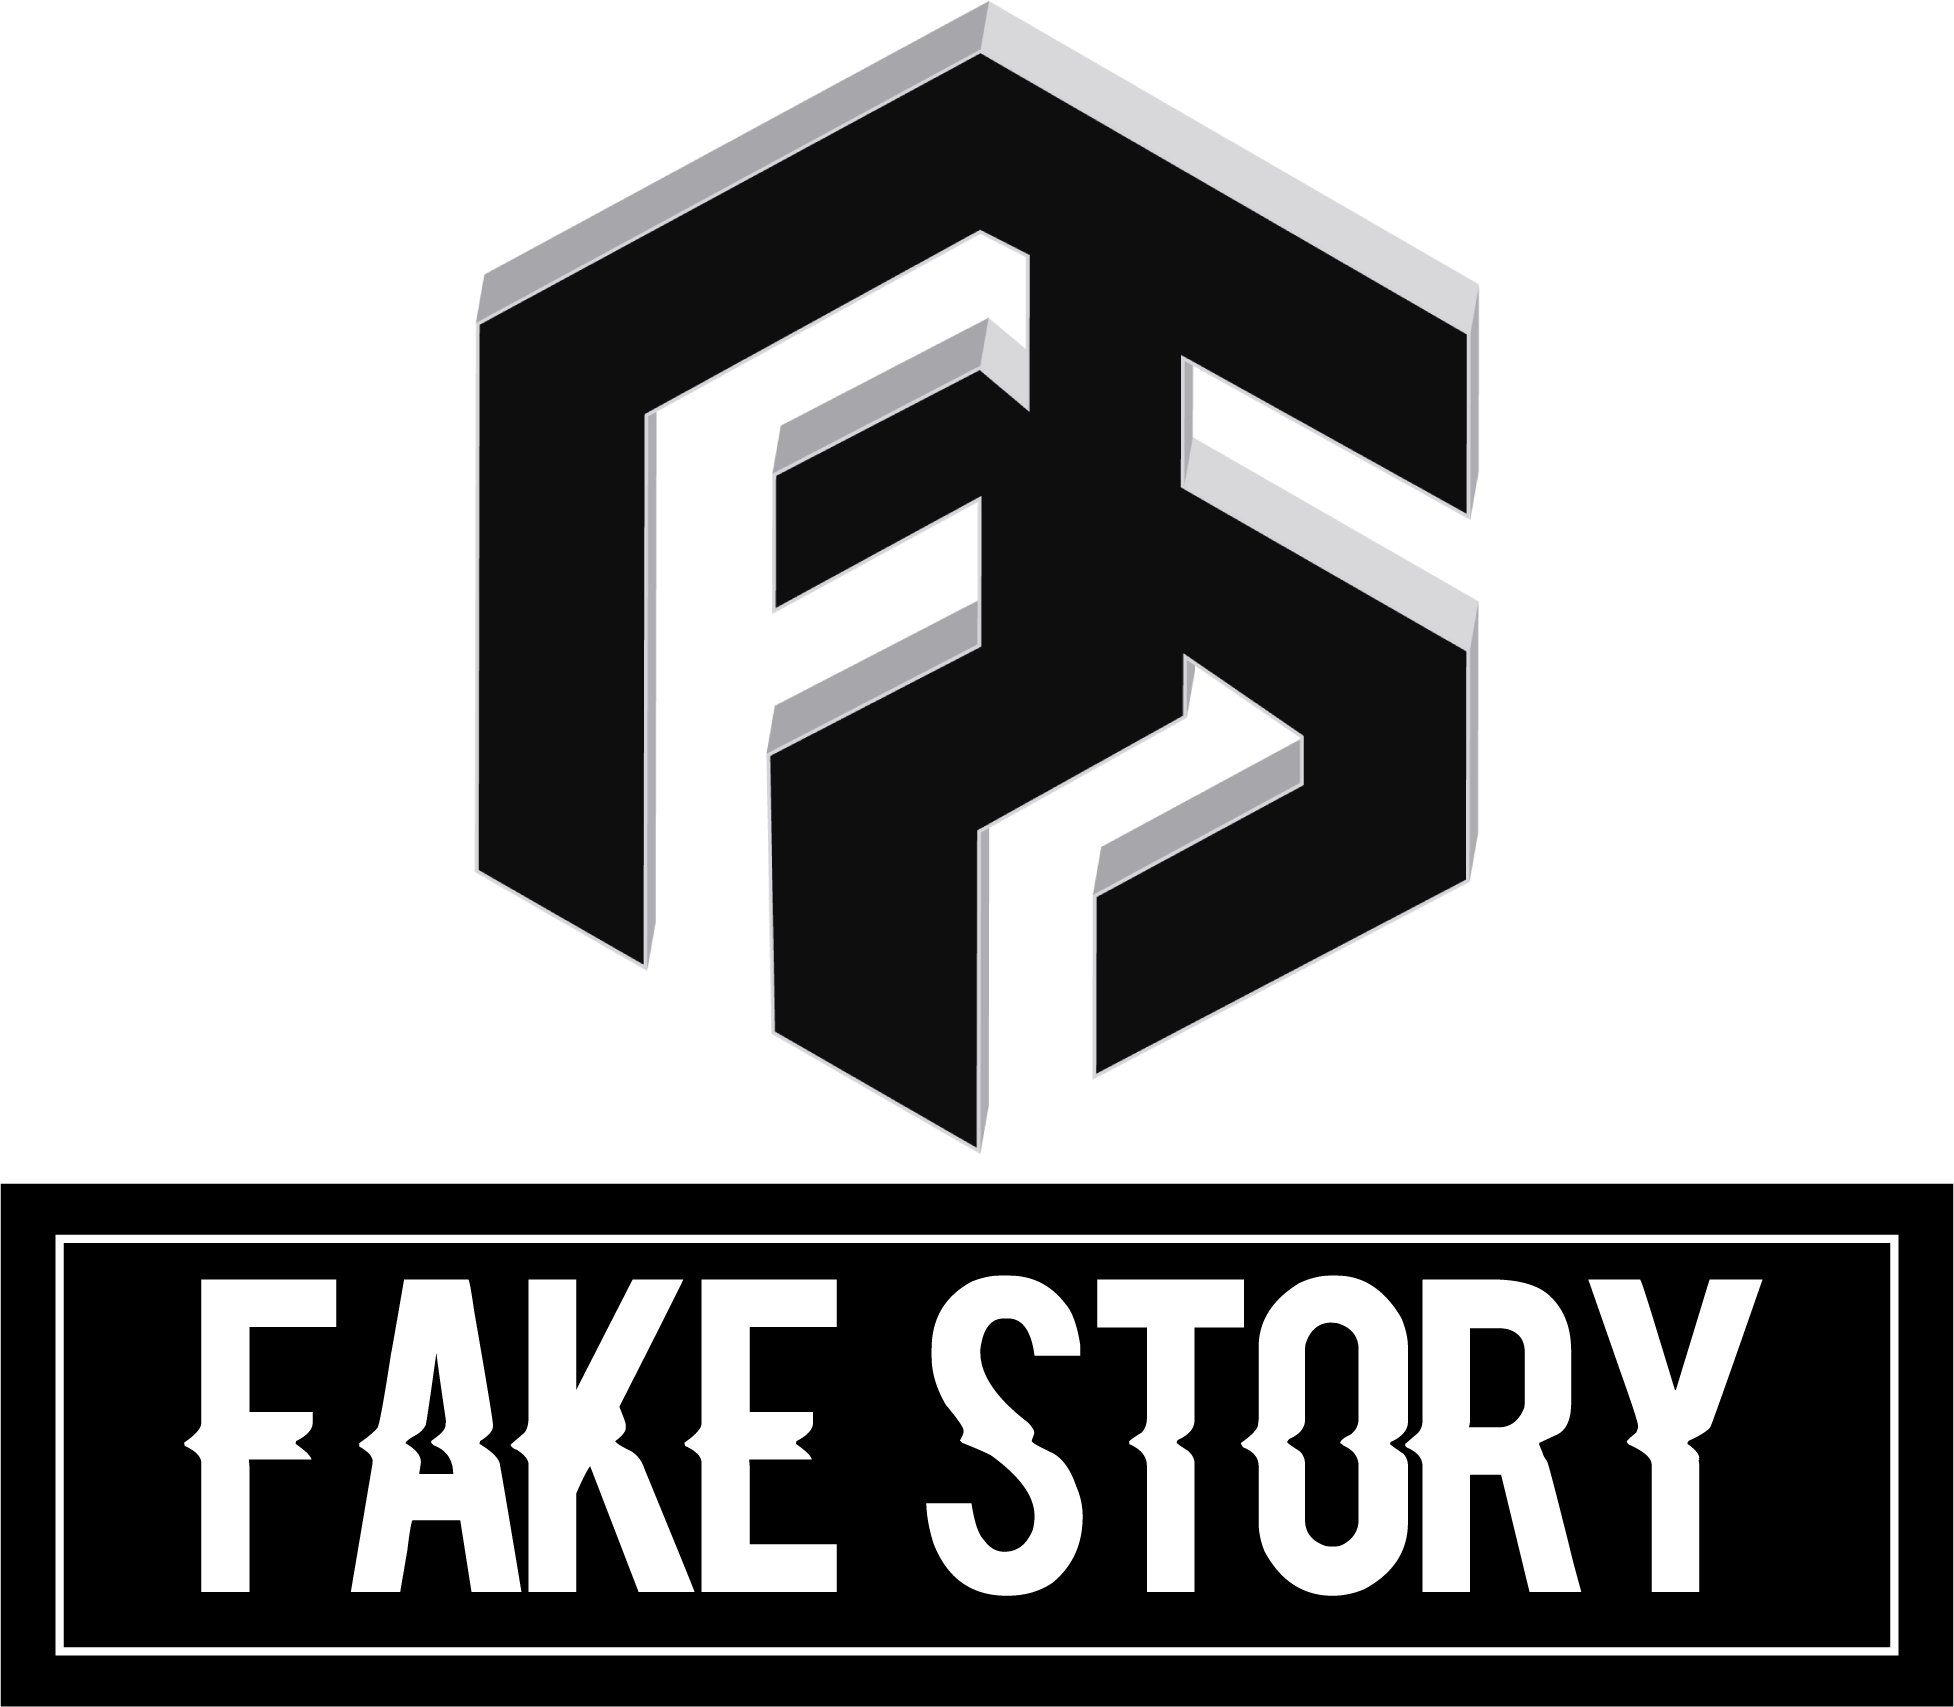 Fake Story